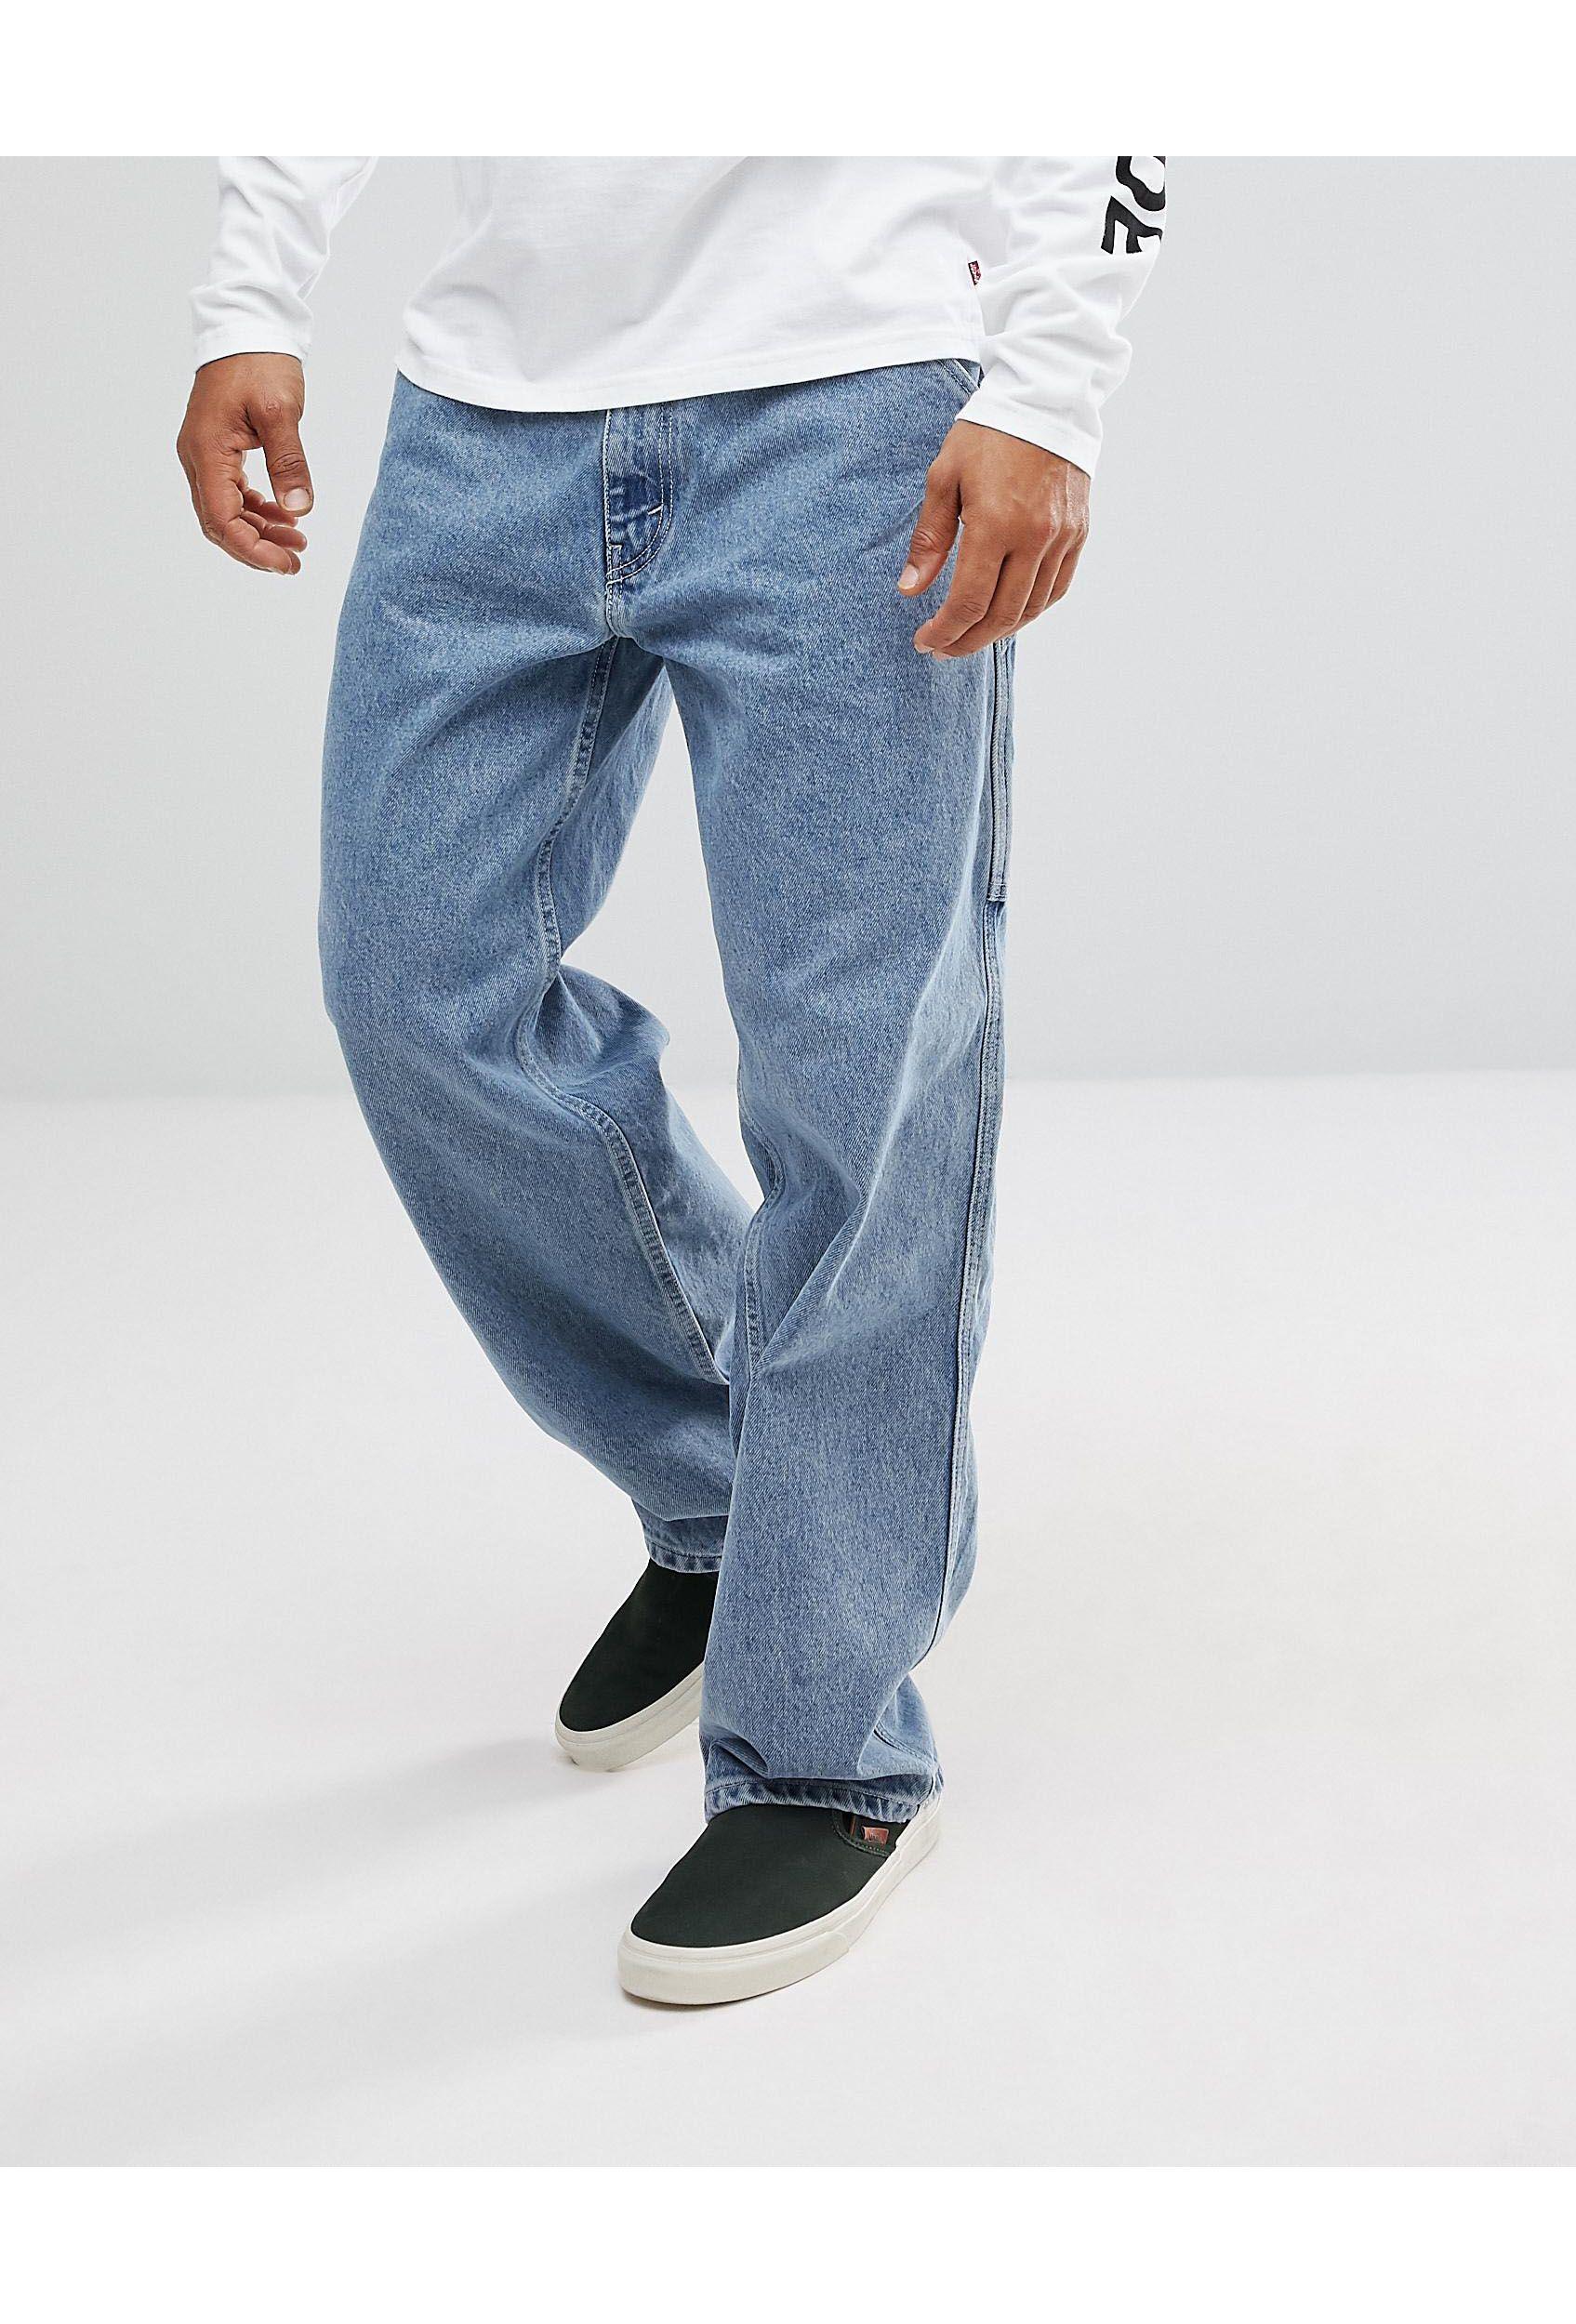 Levi's Denim Levi's Silvertab Carpenter Jeans Midwash in Blue for Men - Lyst